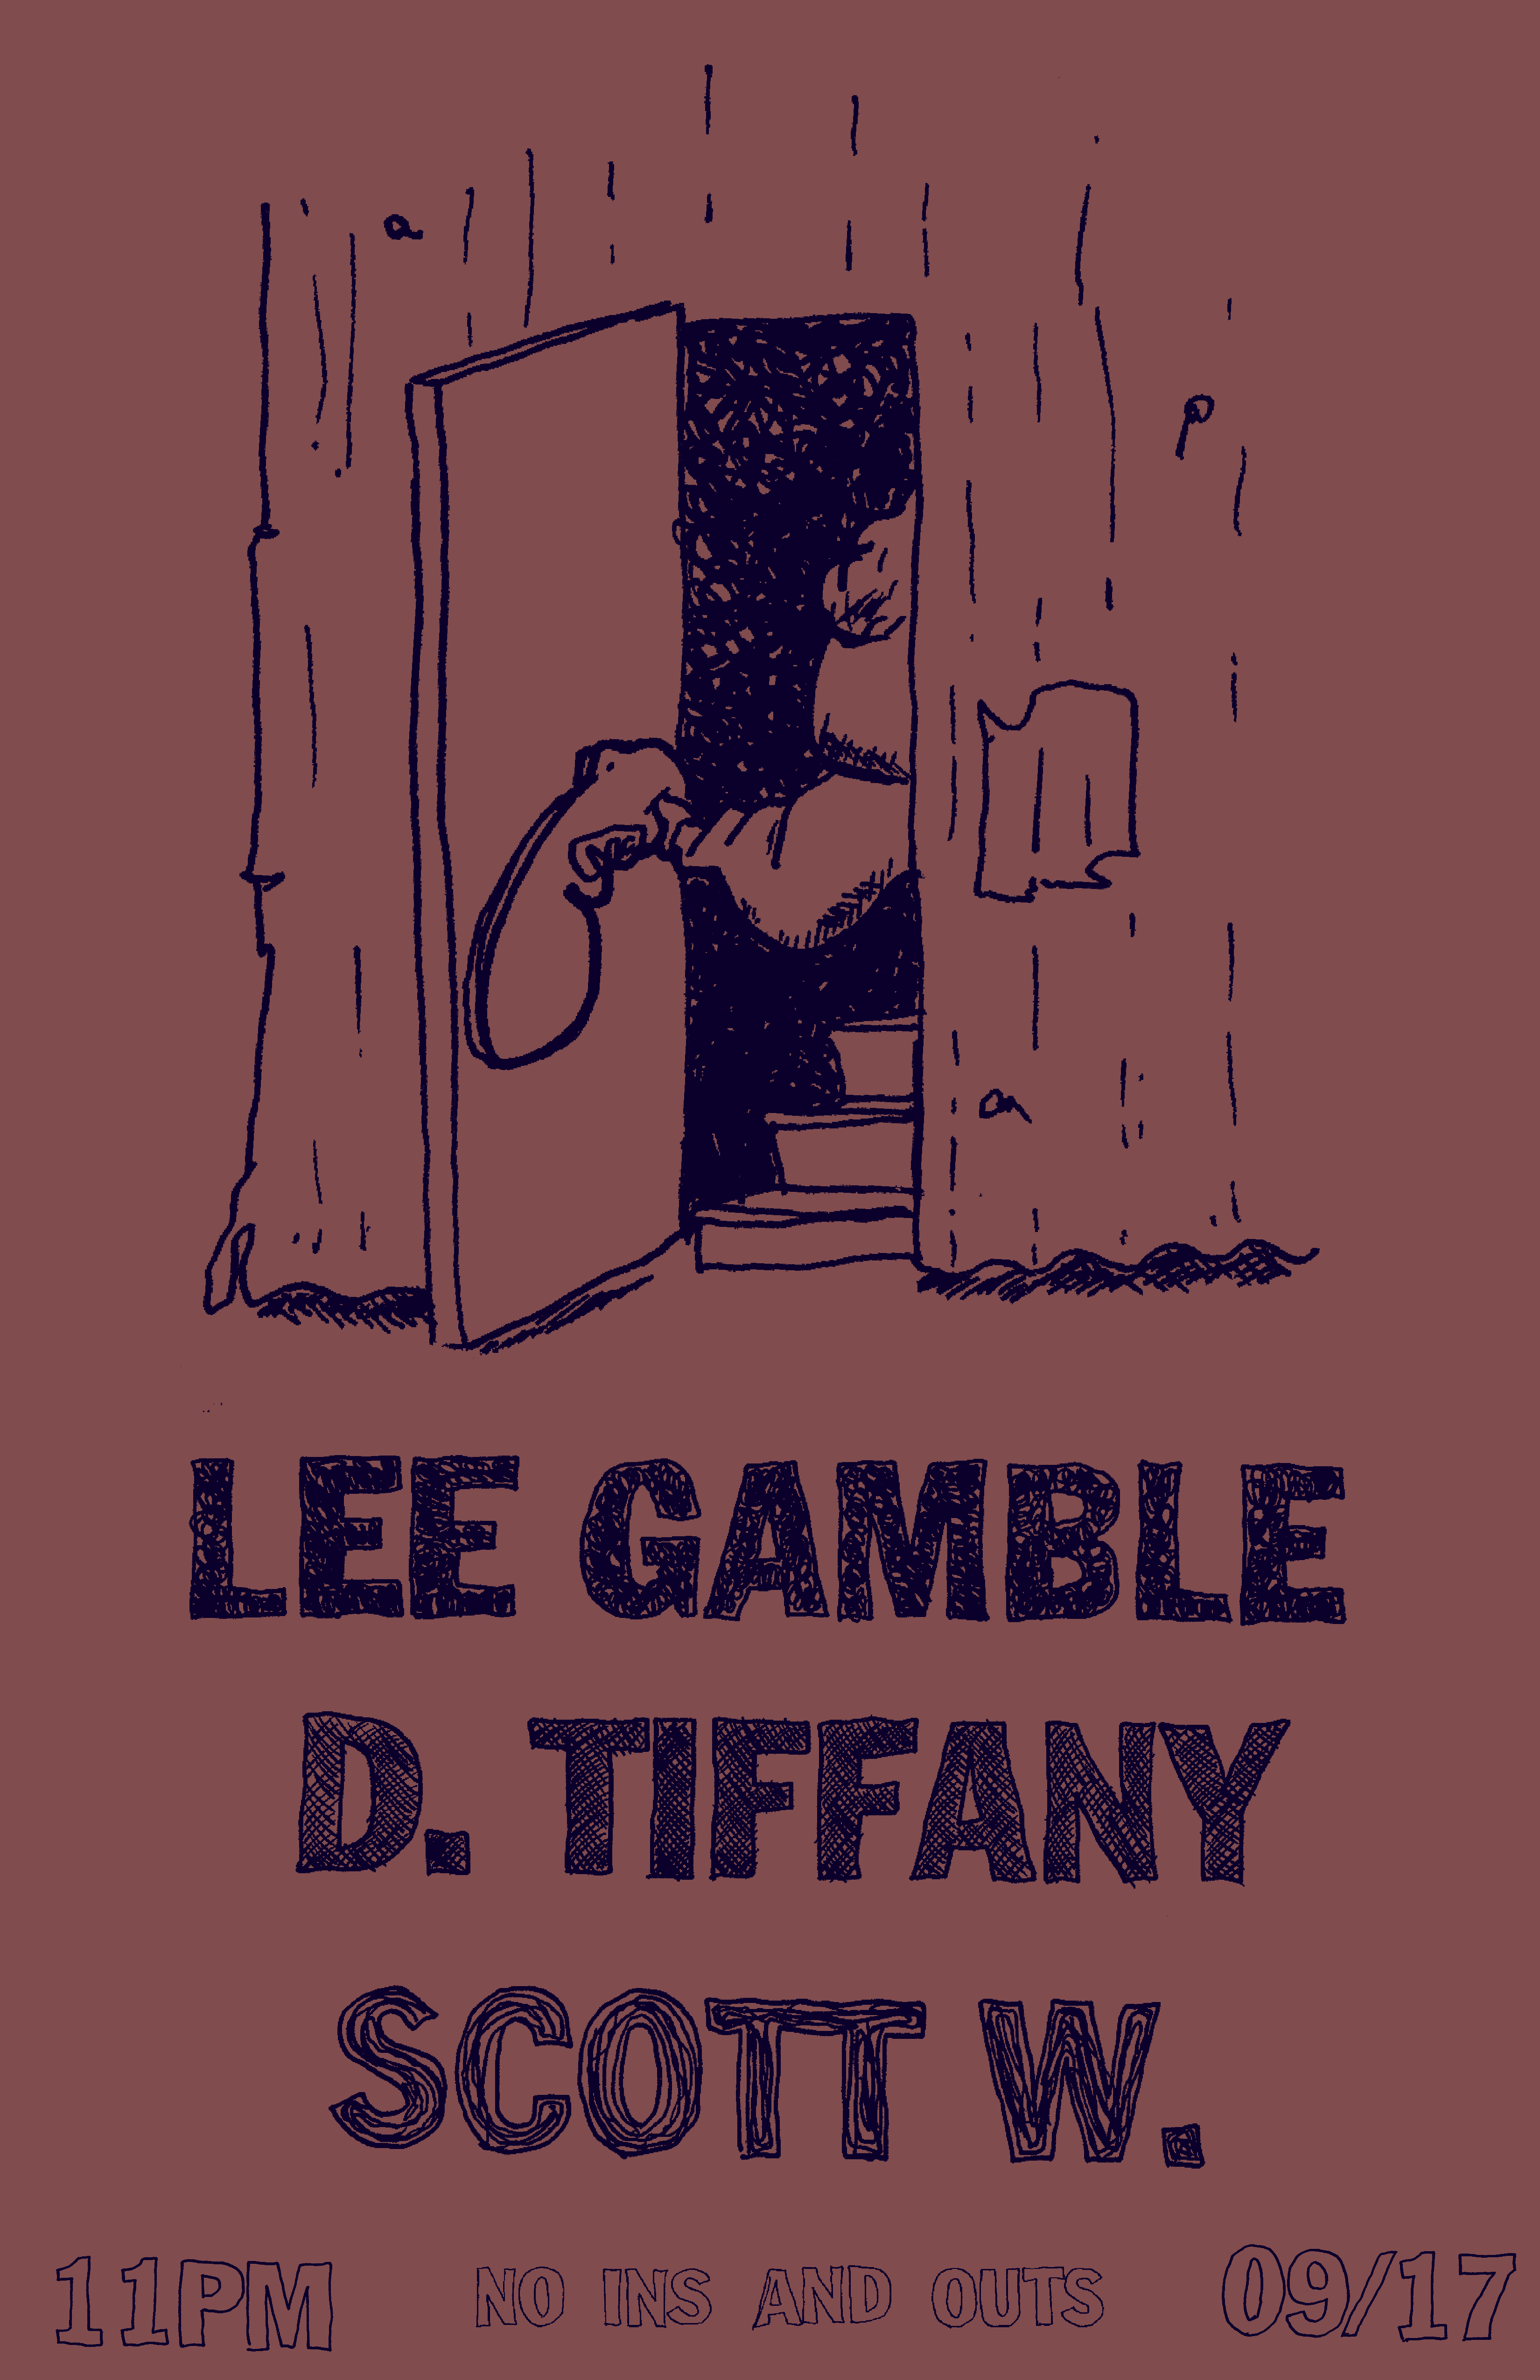 Deep Blue: Lee Gamble, D. Tiffany, and Scott W - フライヤー表